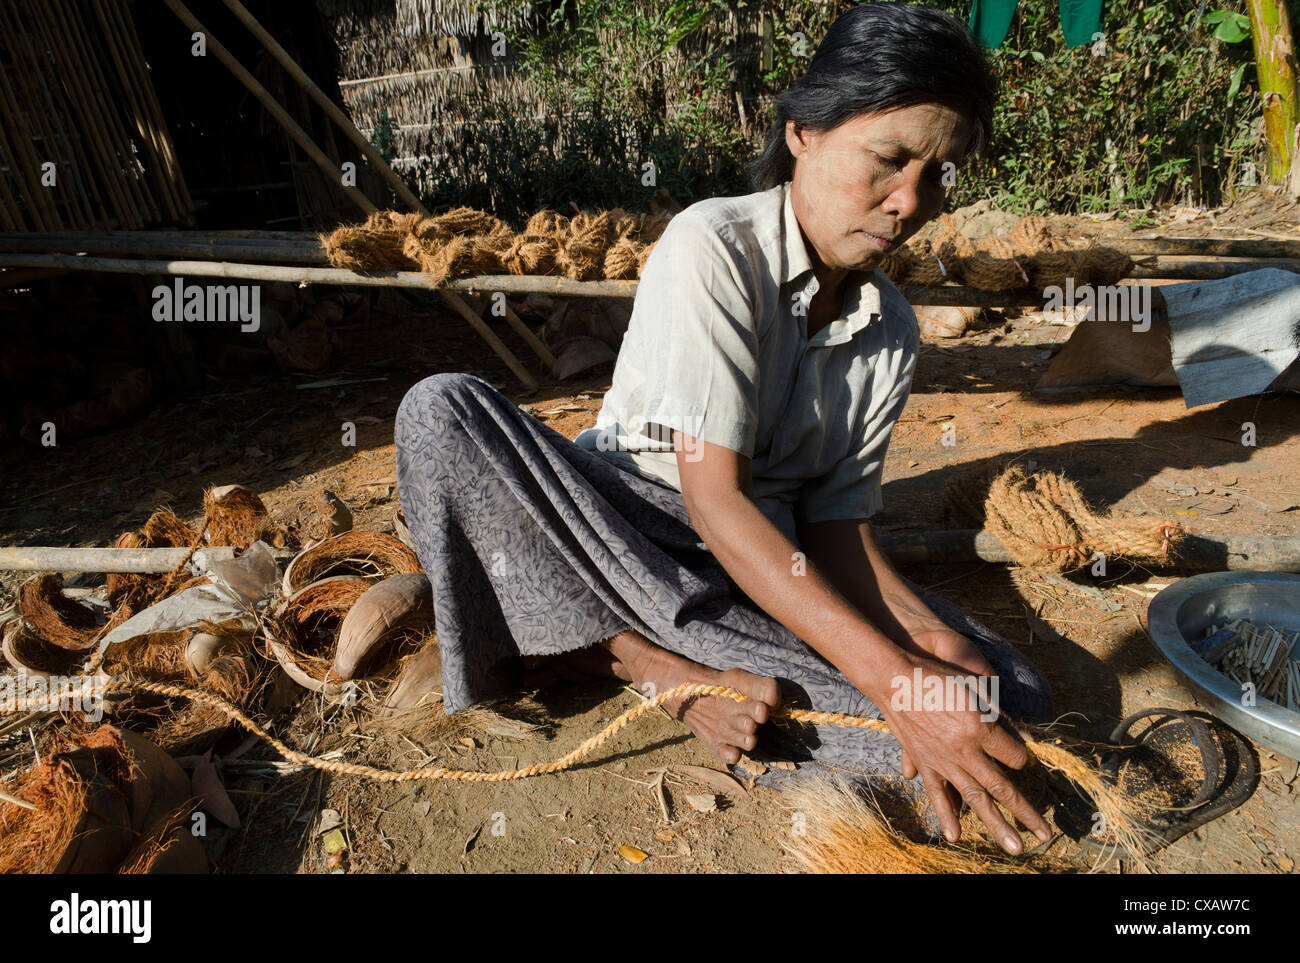 Woman making coconut rope, Ye Saing Kone village near Labutta, Irrawaddy Delta, Myanmar (Burma), Asia Stock Photo